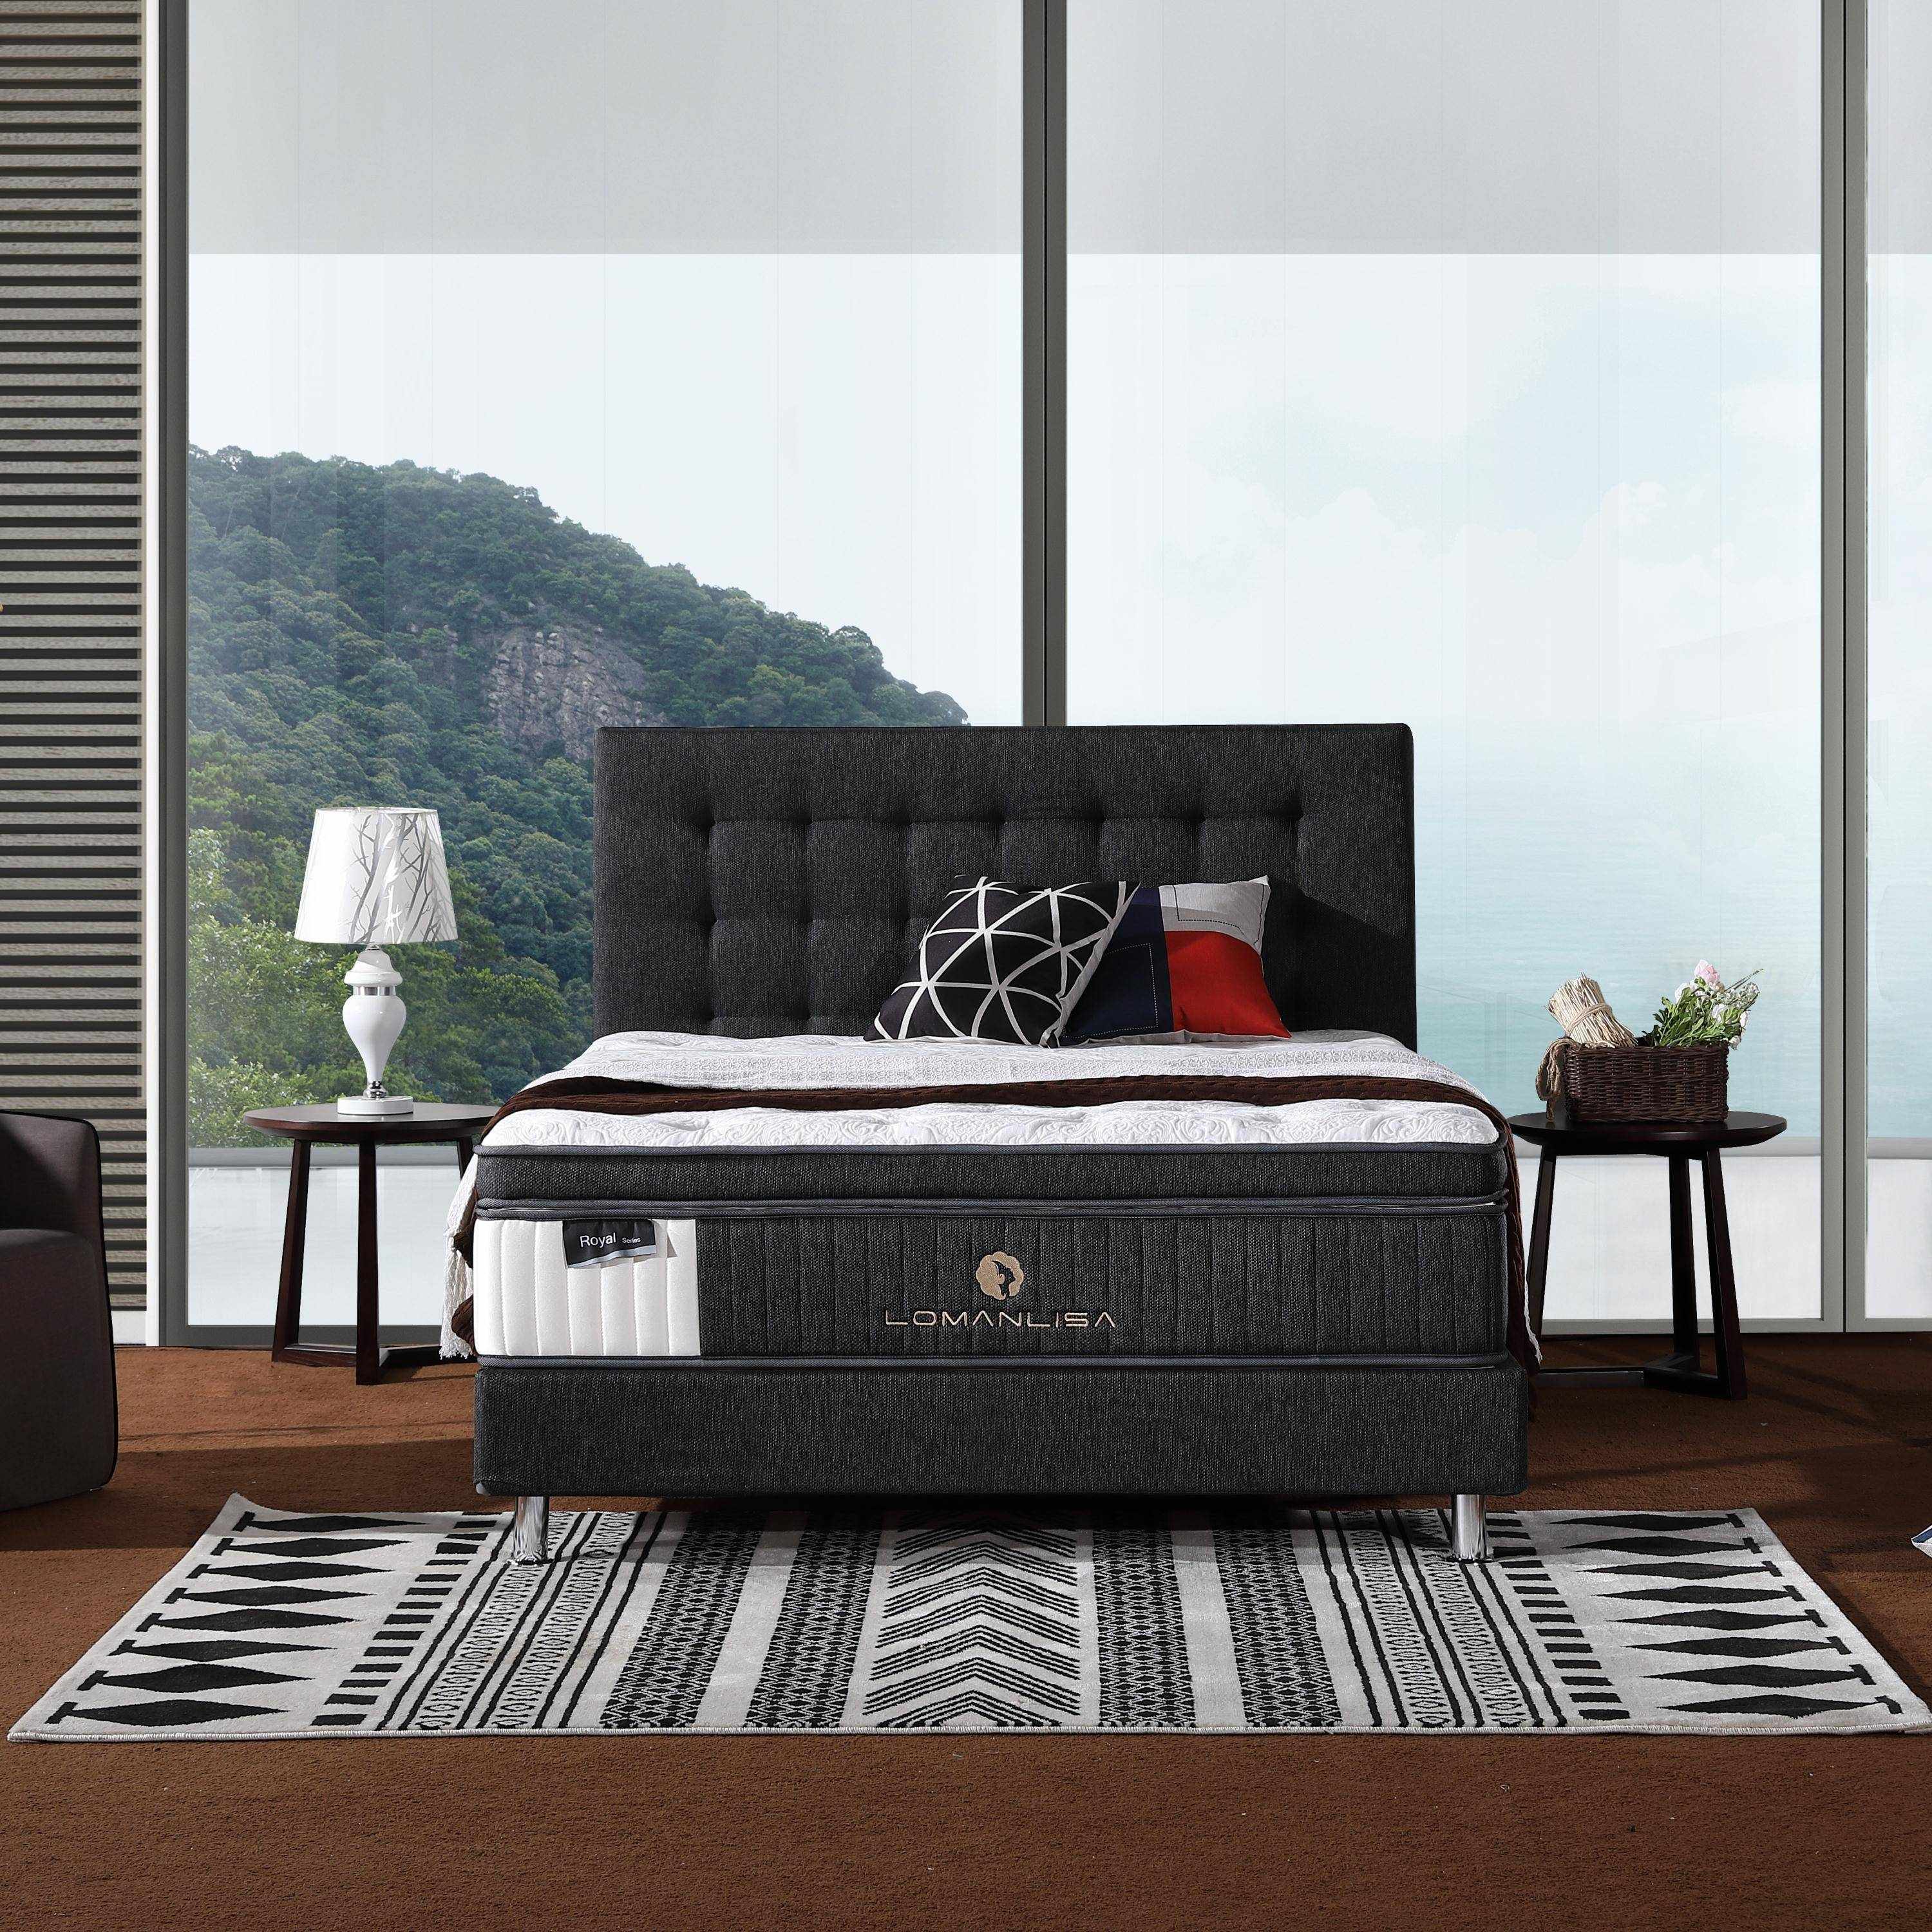 JLH best wool mattress topper Certified for bedroom-1